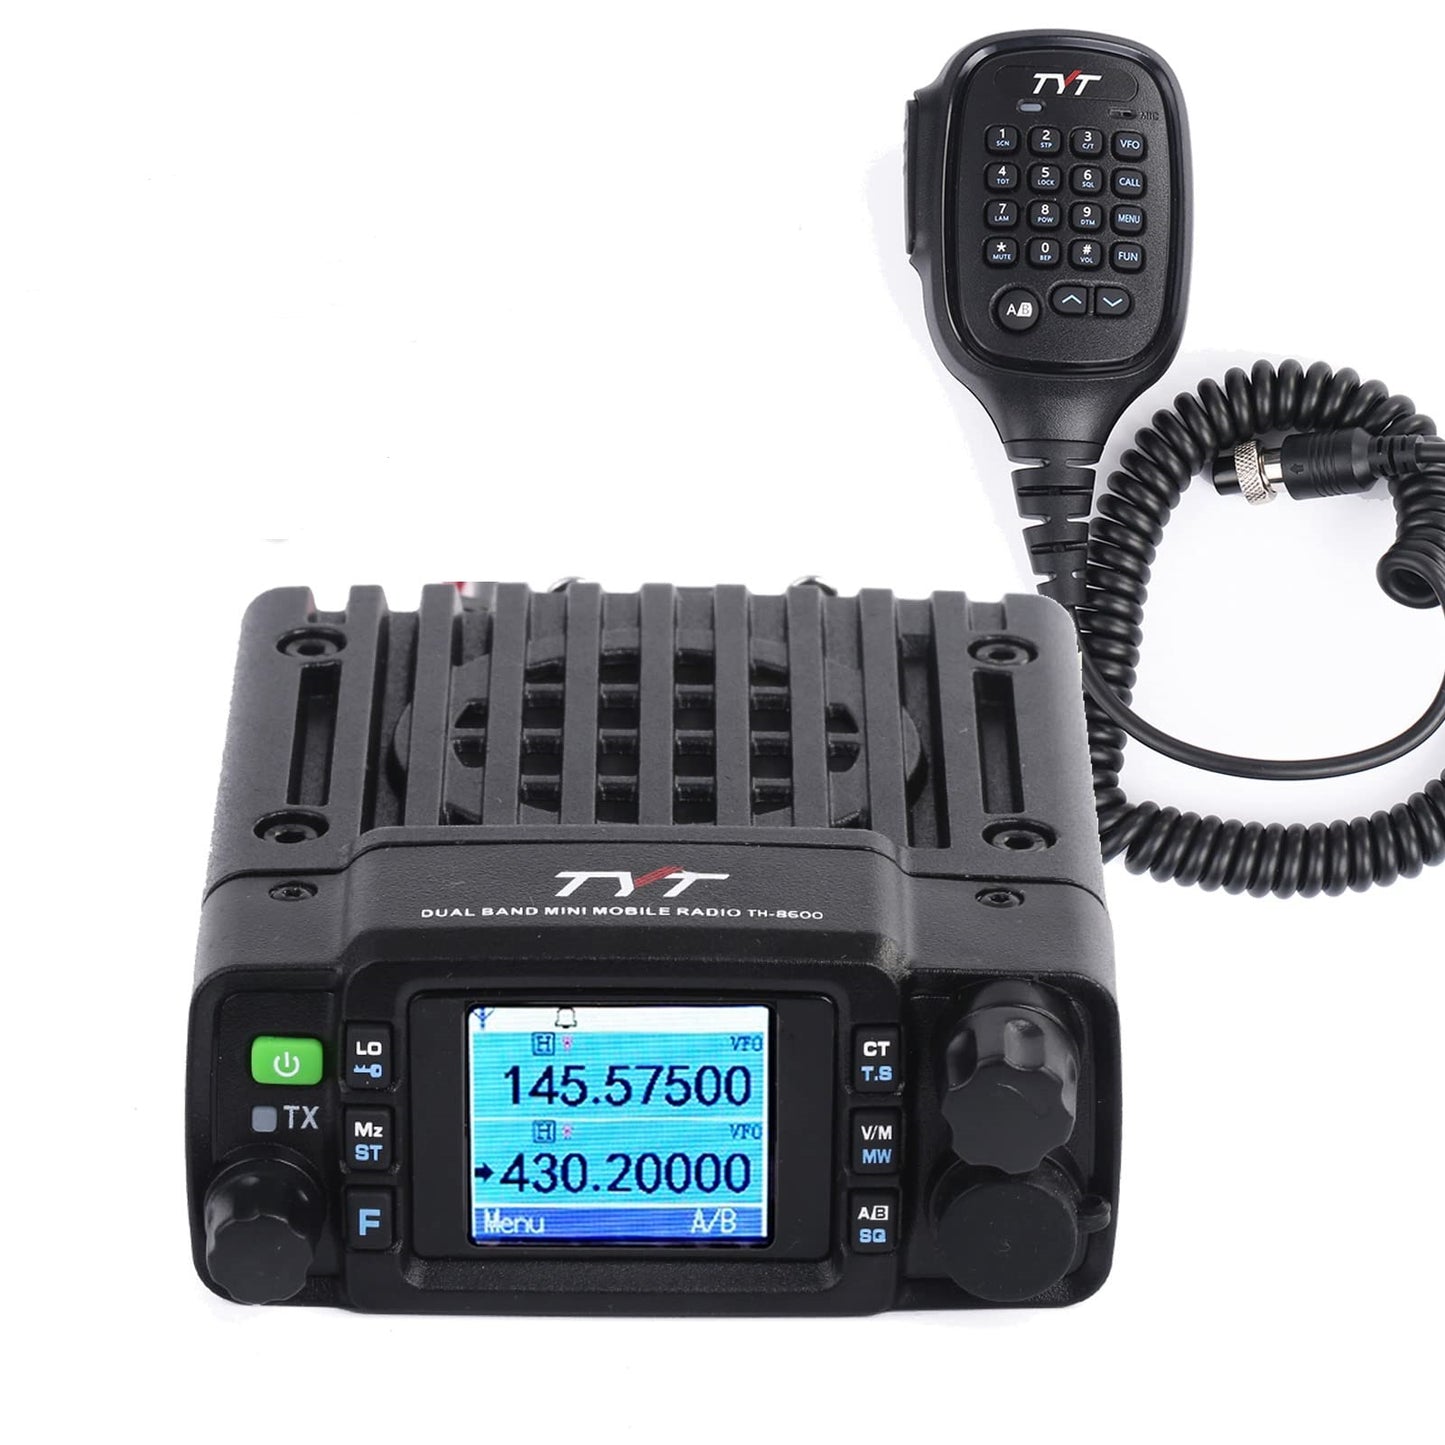 TYT TH-8600 Dual Band Mini IP67 Mobile Transceiver Waterproof Car Radio 2M/70CM